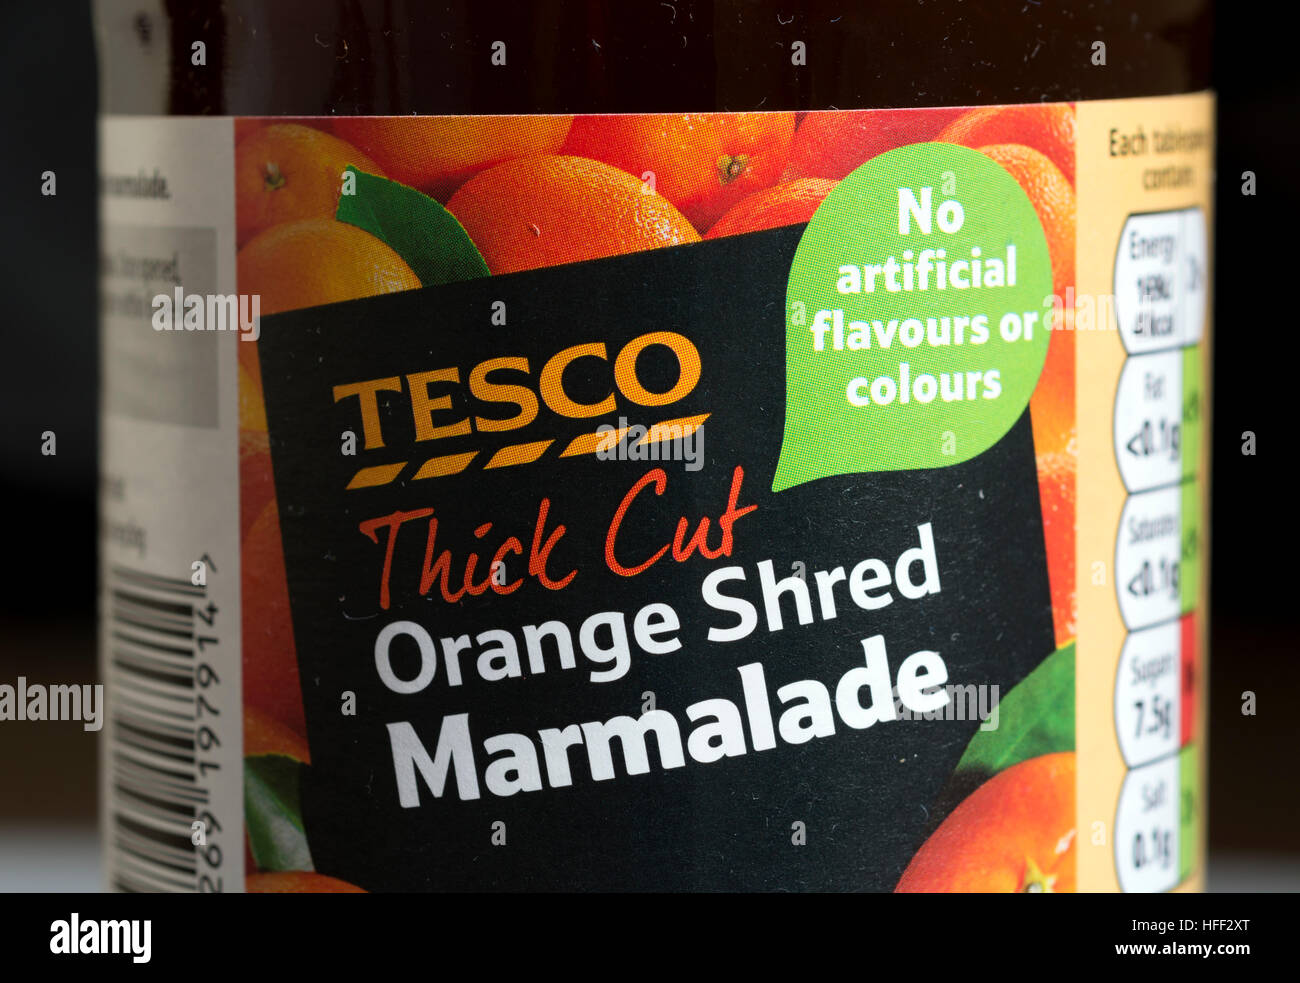 Tesco Thick Cut Orange Shred Marmalade Stock Photo